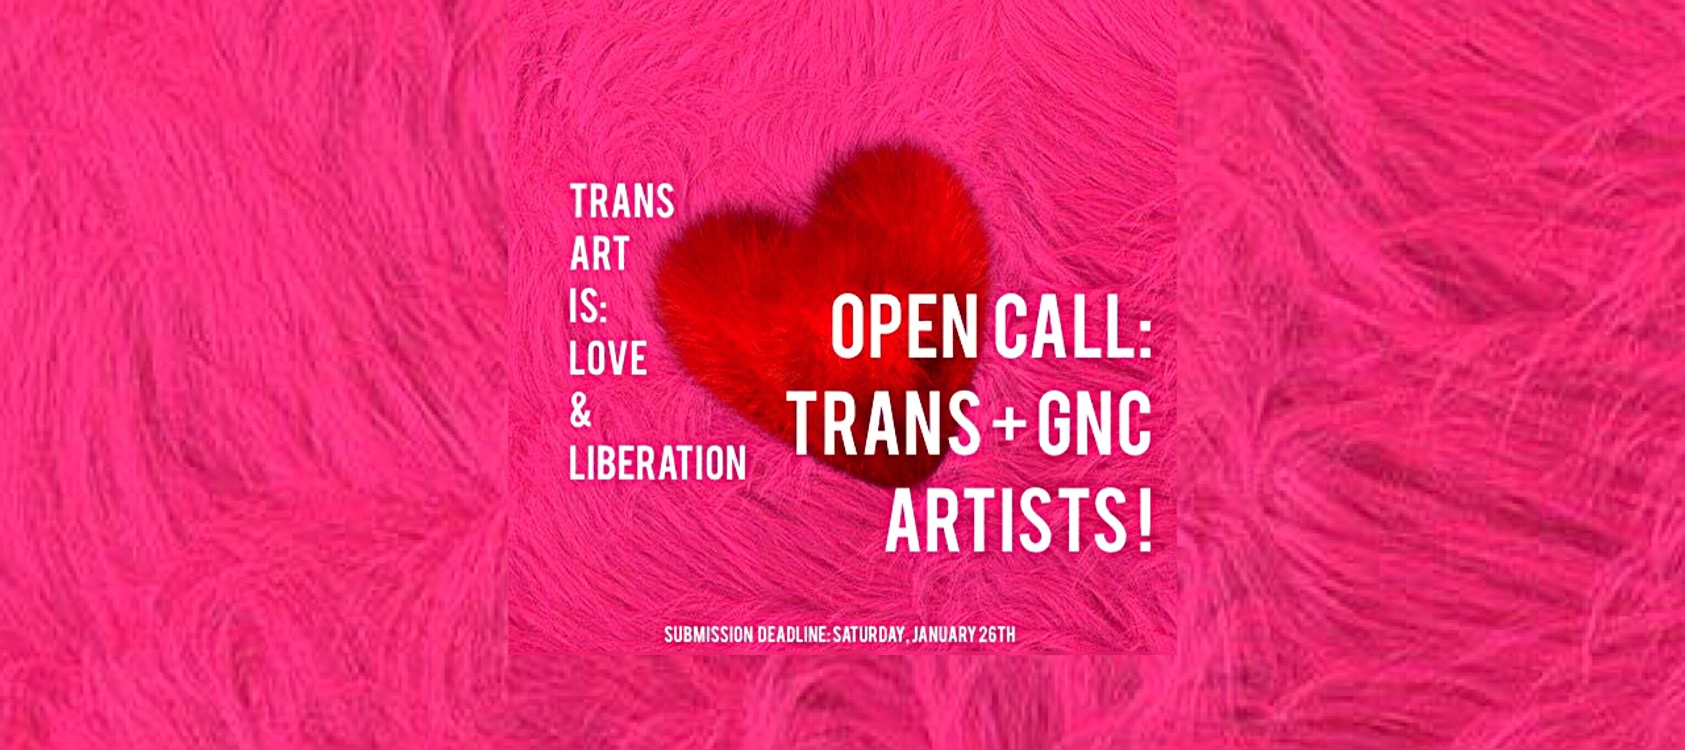 Trans Art Is: Love & Liberation